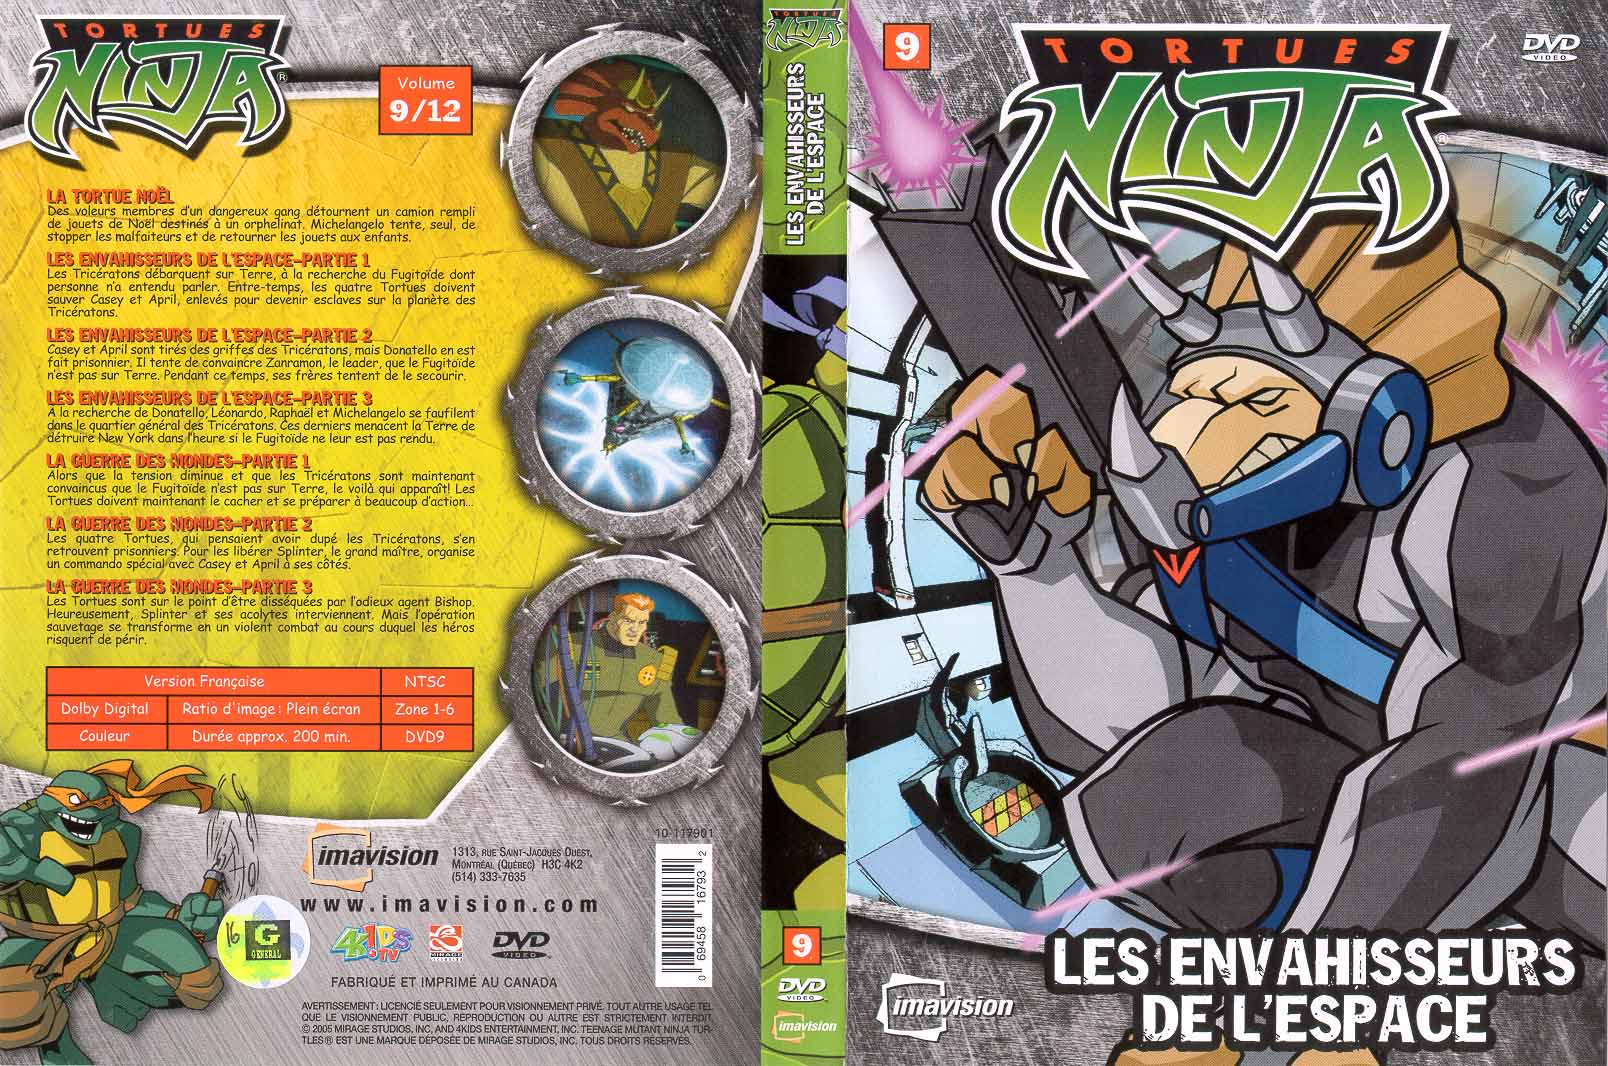 Jaquette DVD Tortues Ninja vol 9